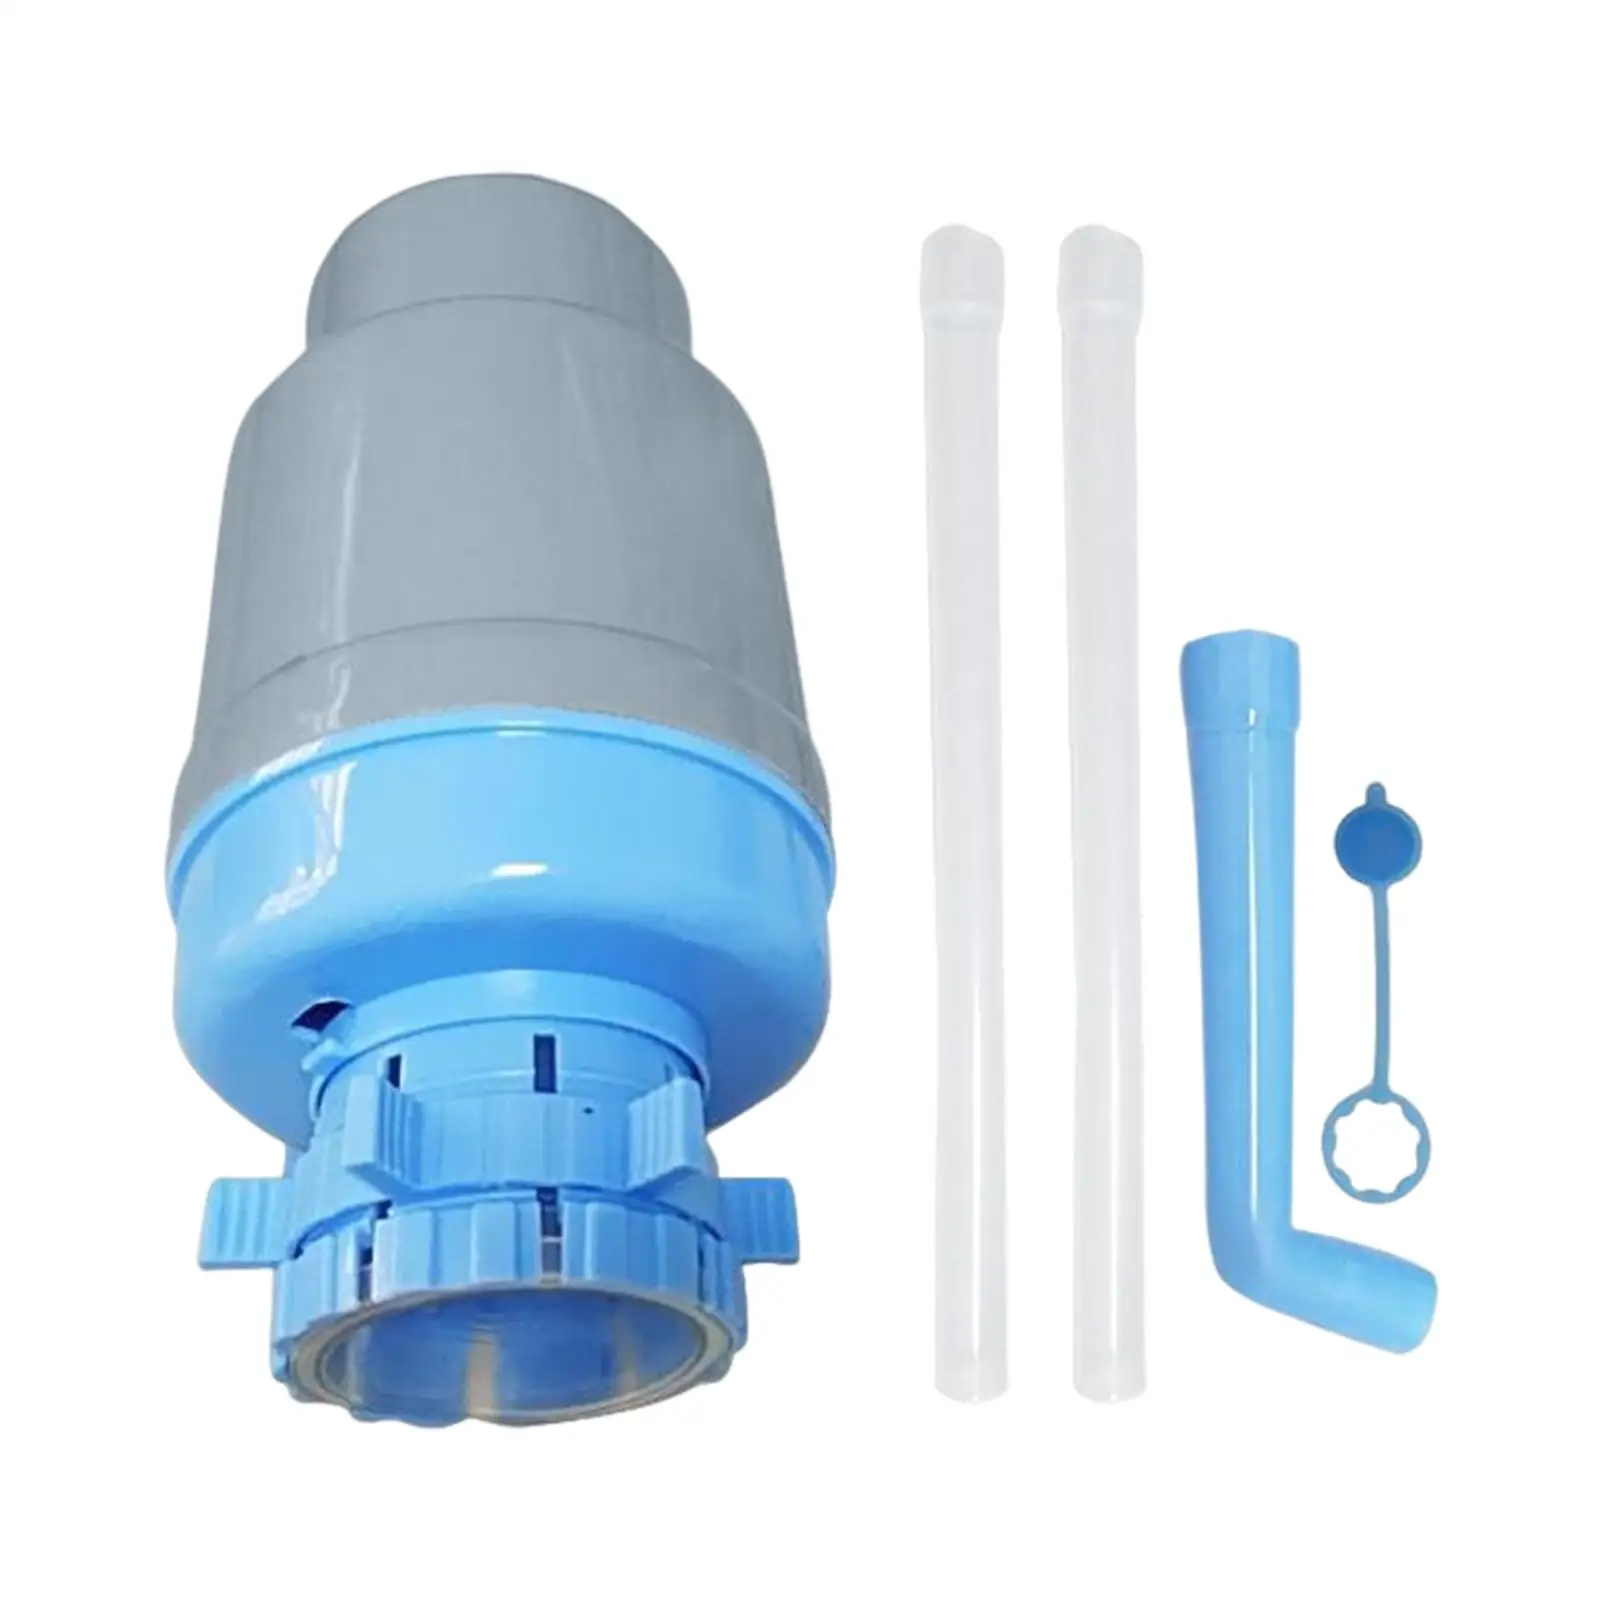 Manual Drinking Water Pump, Hand Press Pump Dispenser, Water Bottle Dispenser Pump for Home Office Camping